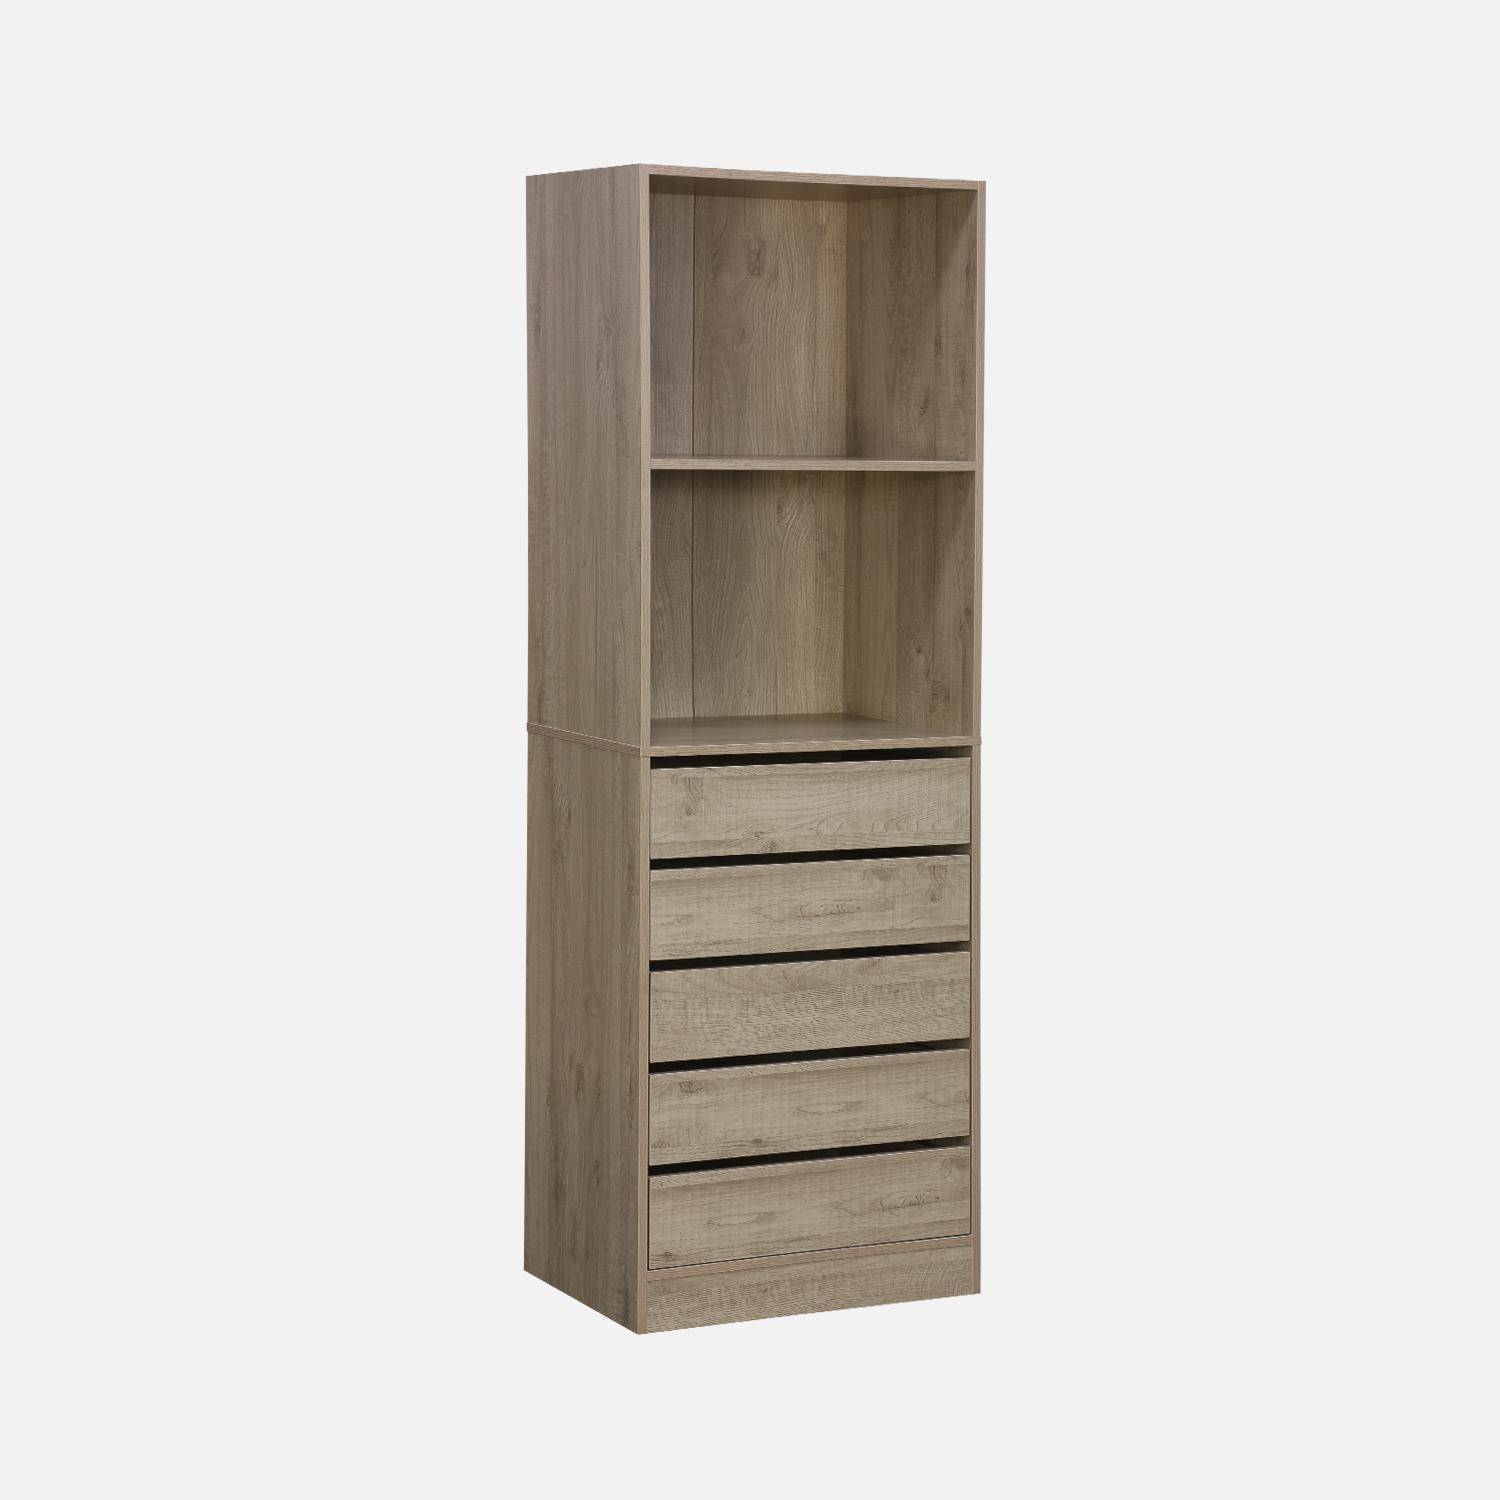 Modular open wardrobe drawer and shelf unit, 60x45x180cm, Modulo, 5 drawers, 2 shelves, Natural,sweeek,Photo4